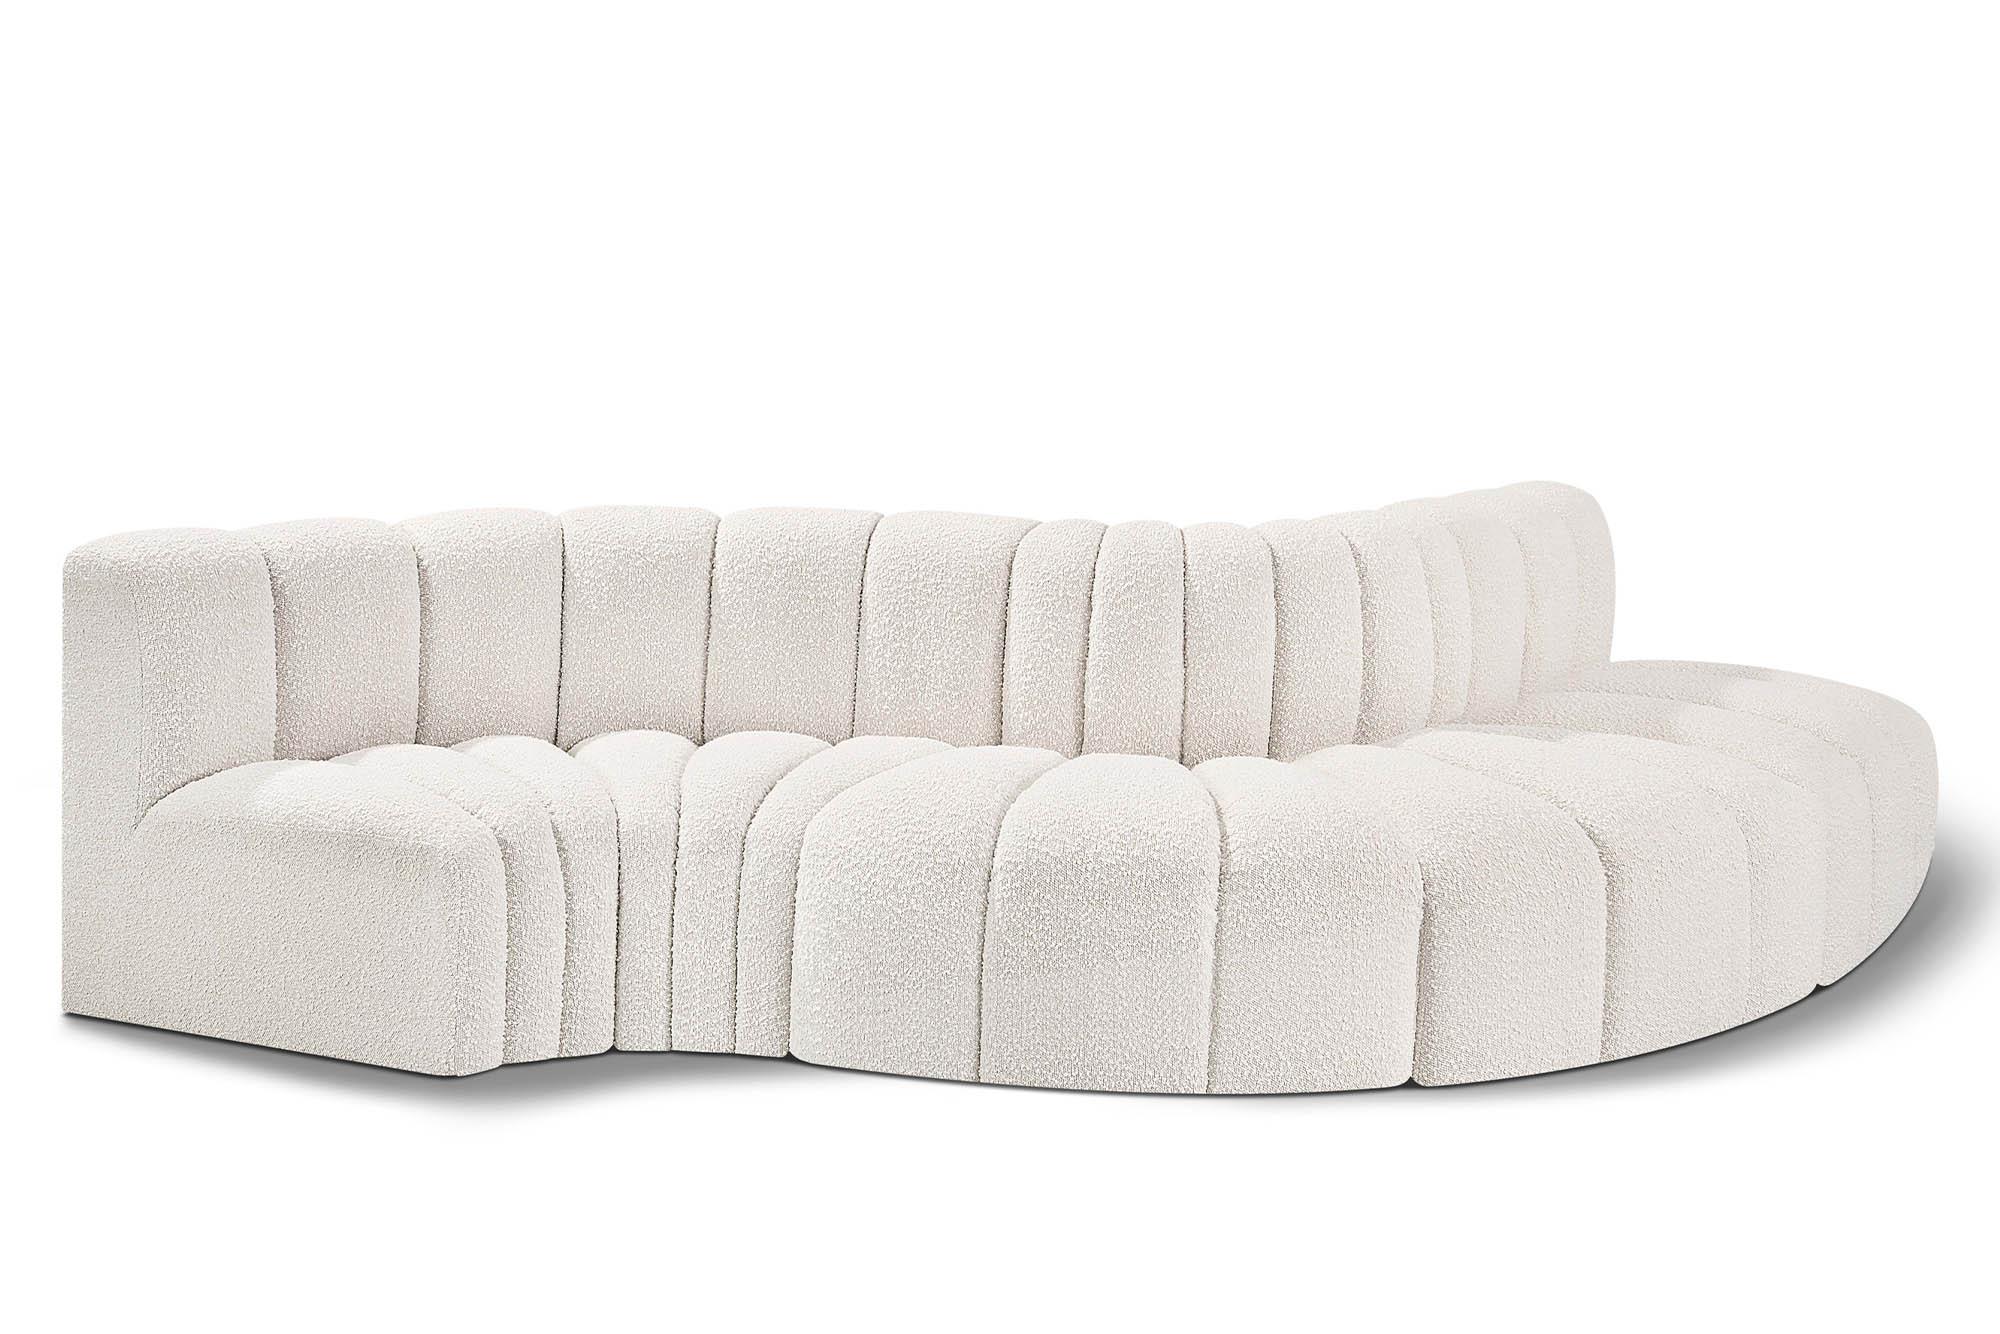 Contemporary, Modern Modular Sectional Sofa ARC 102Cream-S5B 102Cream-S5B in Cream 